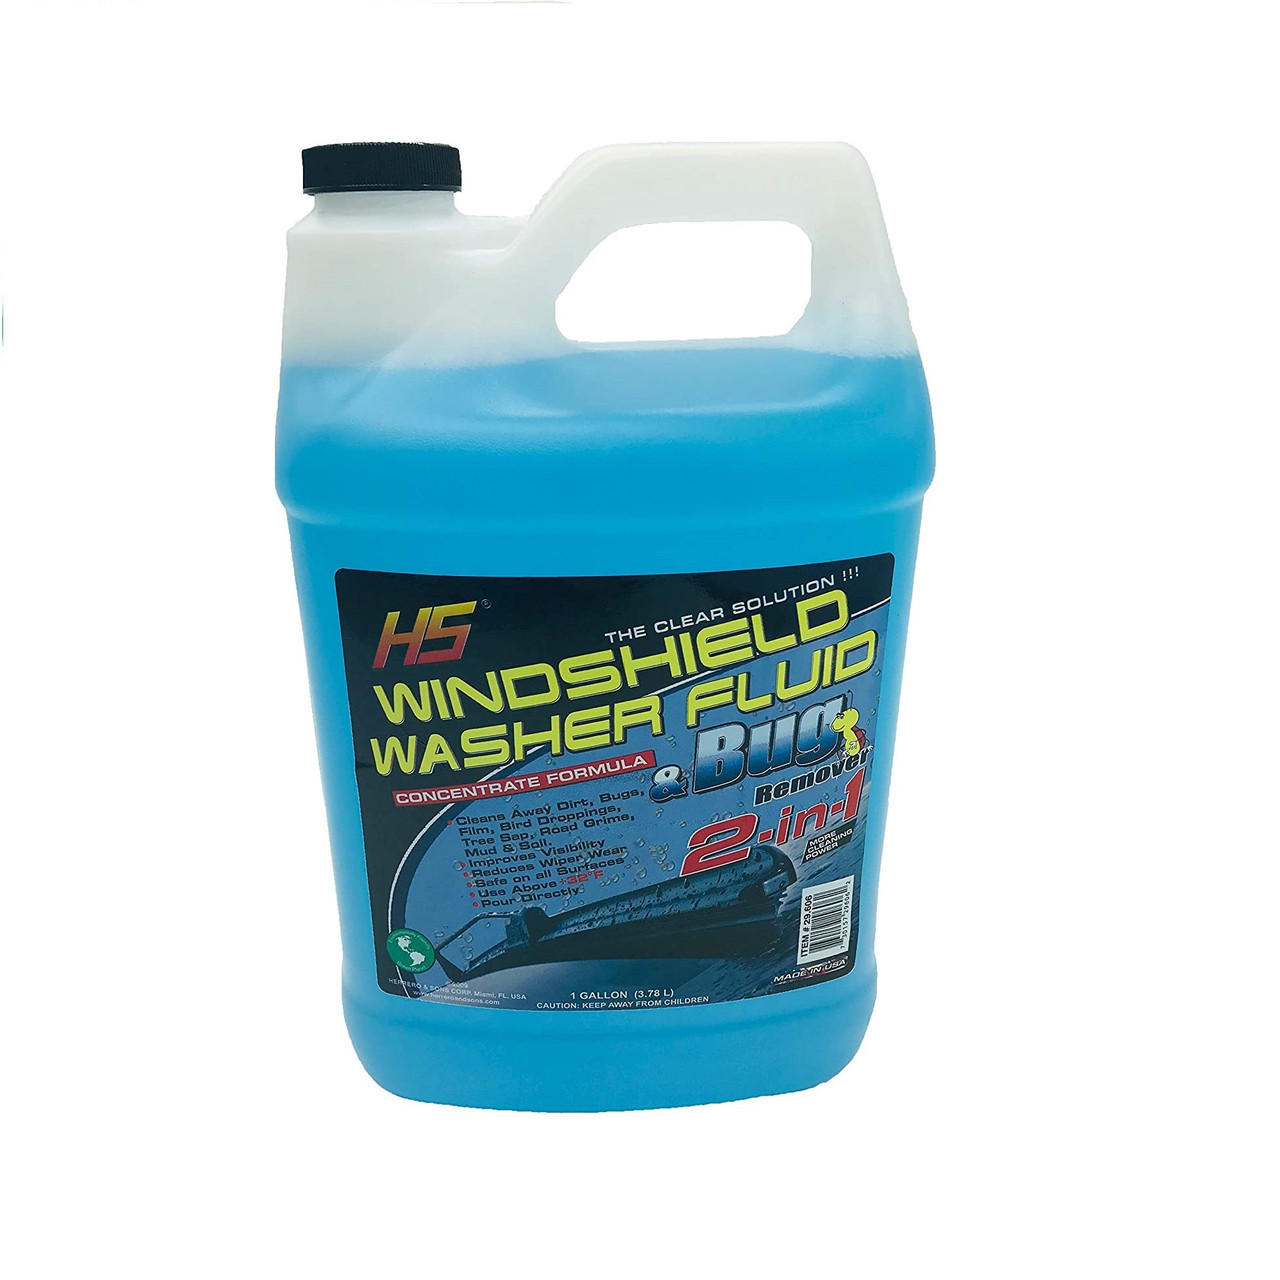 HS 29.606 Bug Wash Windshield Washer Fluid, 1 Gal (3.78 Liters)